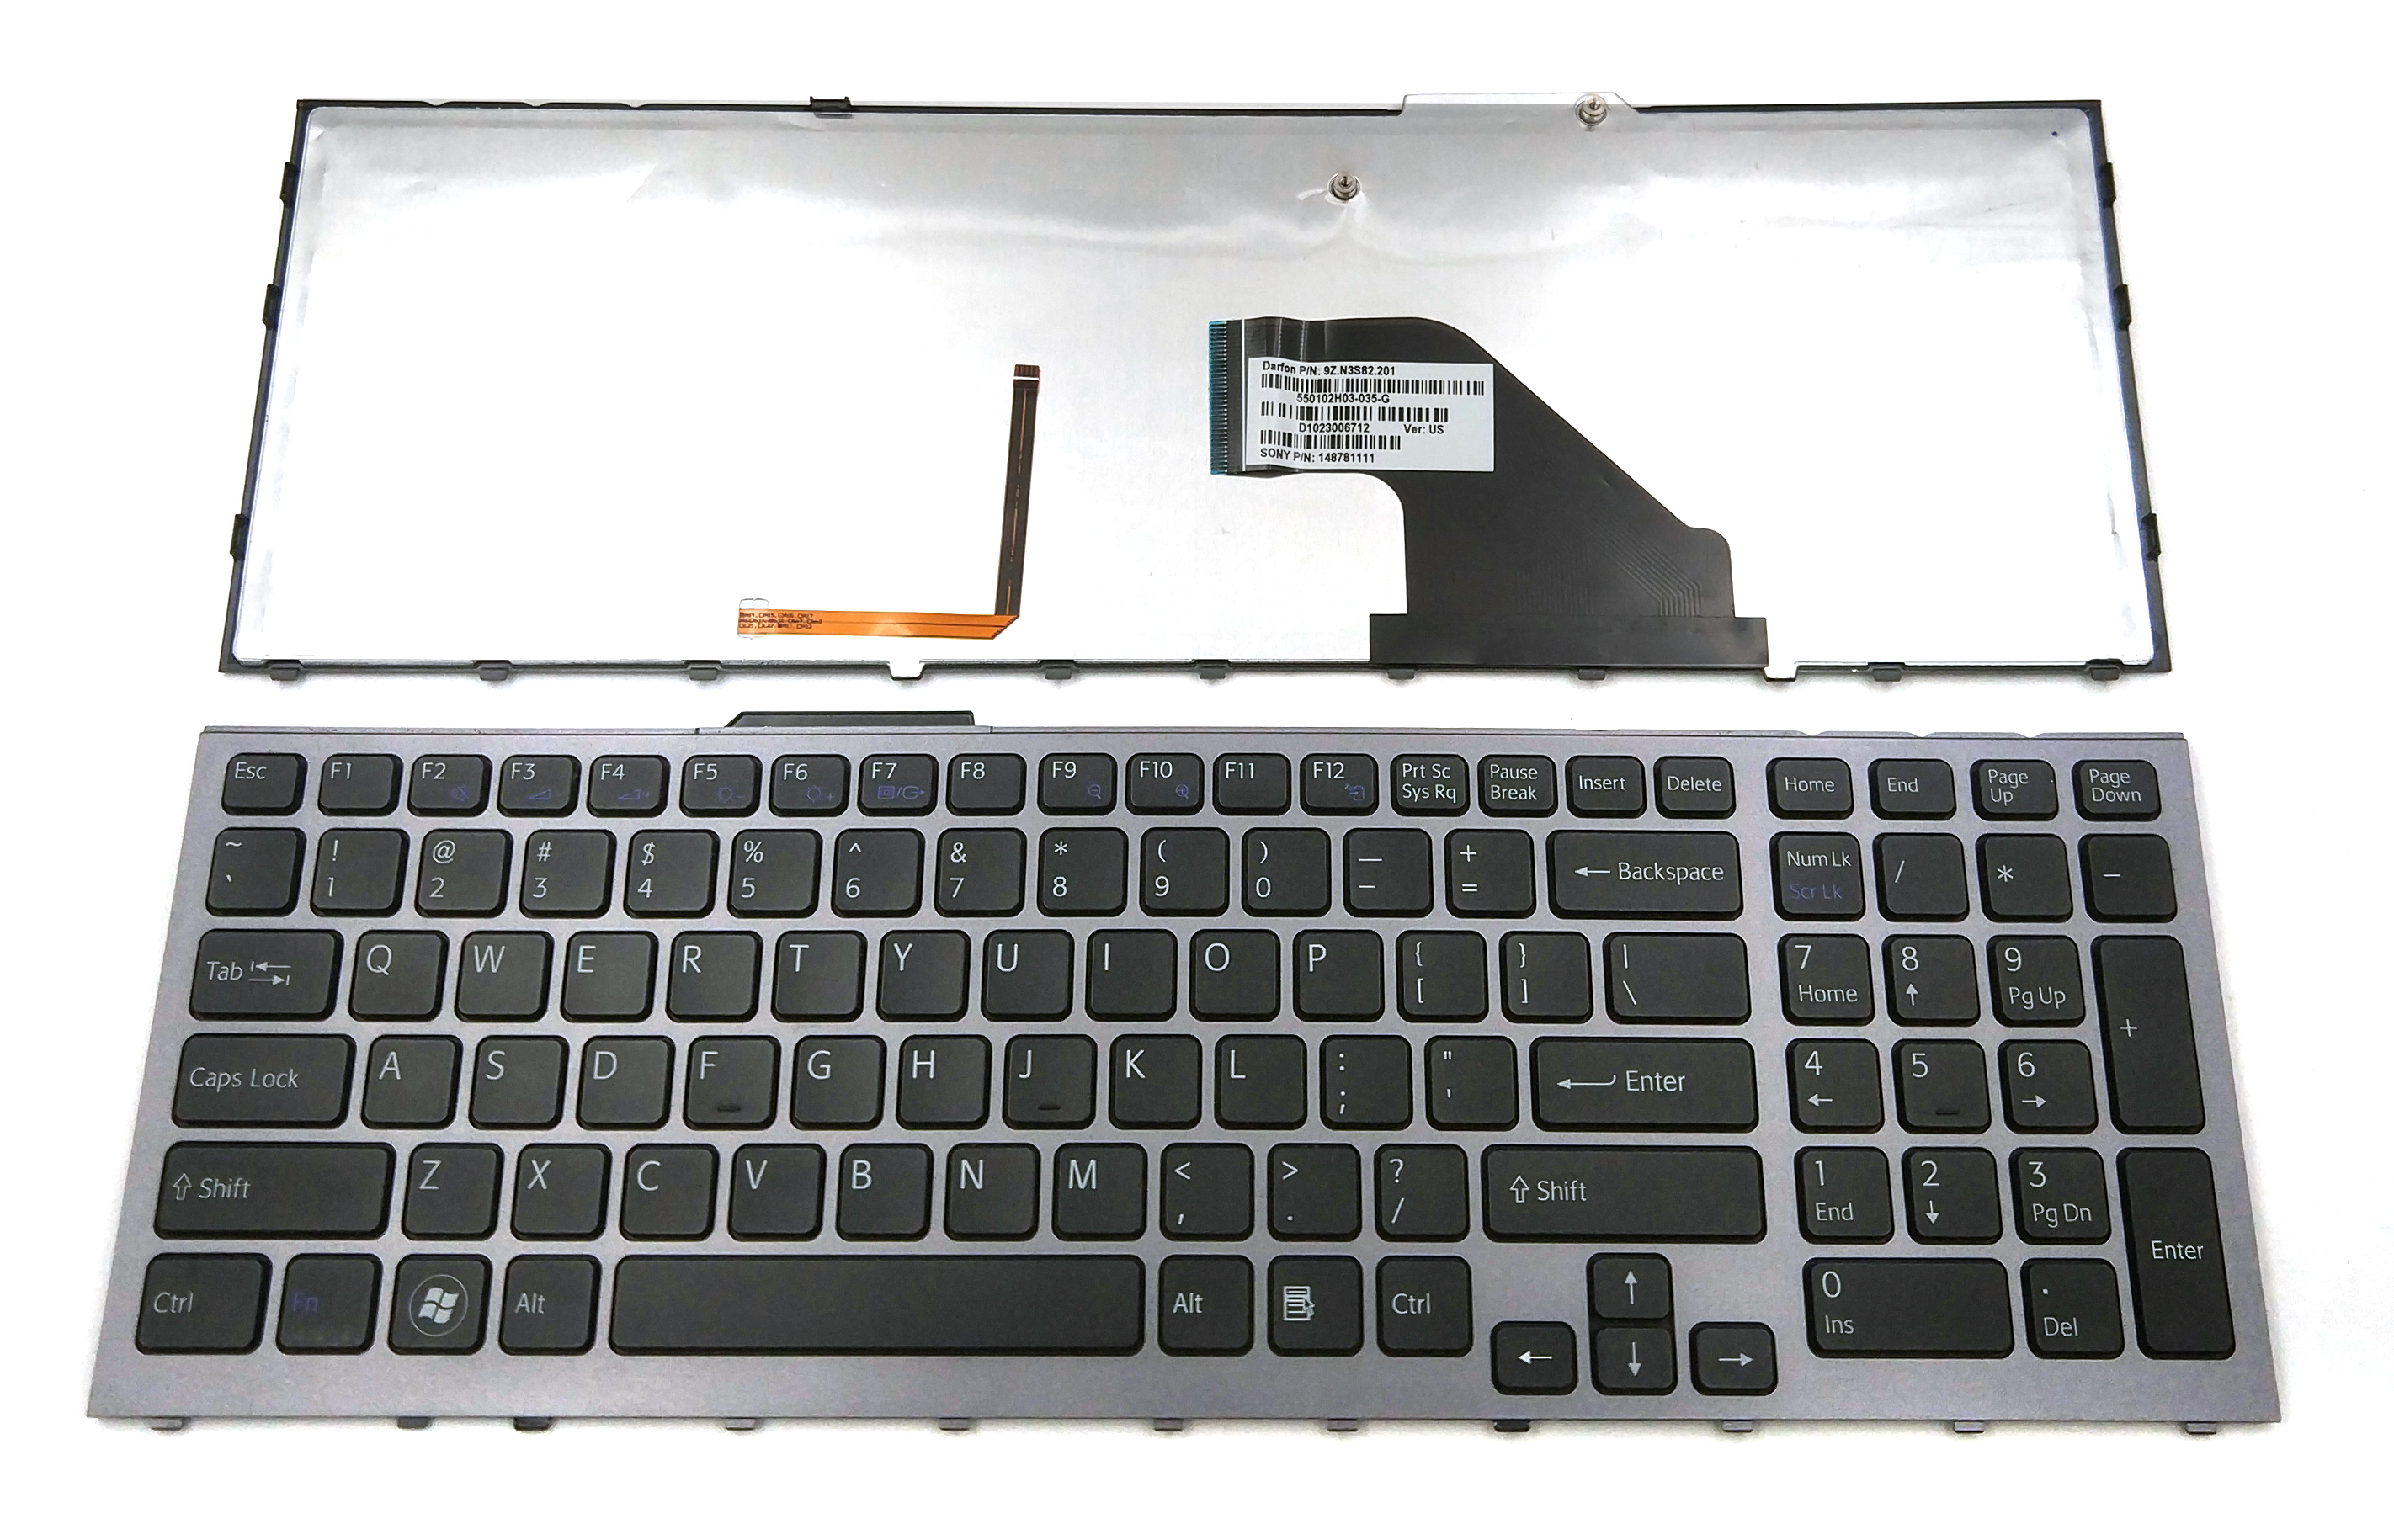 Laptop Backlit Keyboard Compatible for Sony P/N AEFI2U000103A 9Z.NABBQ.401 149263721US AEFI2R000103A 9Z.NABBQ.41D NSK-SK4BQ 1D US Layout Black Color 